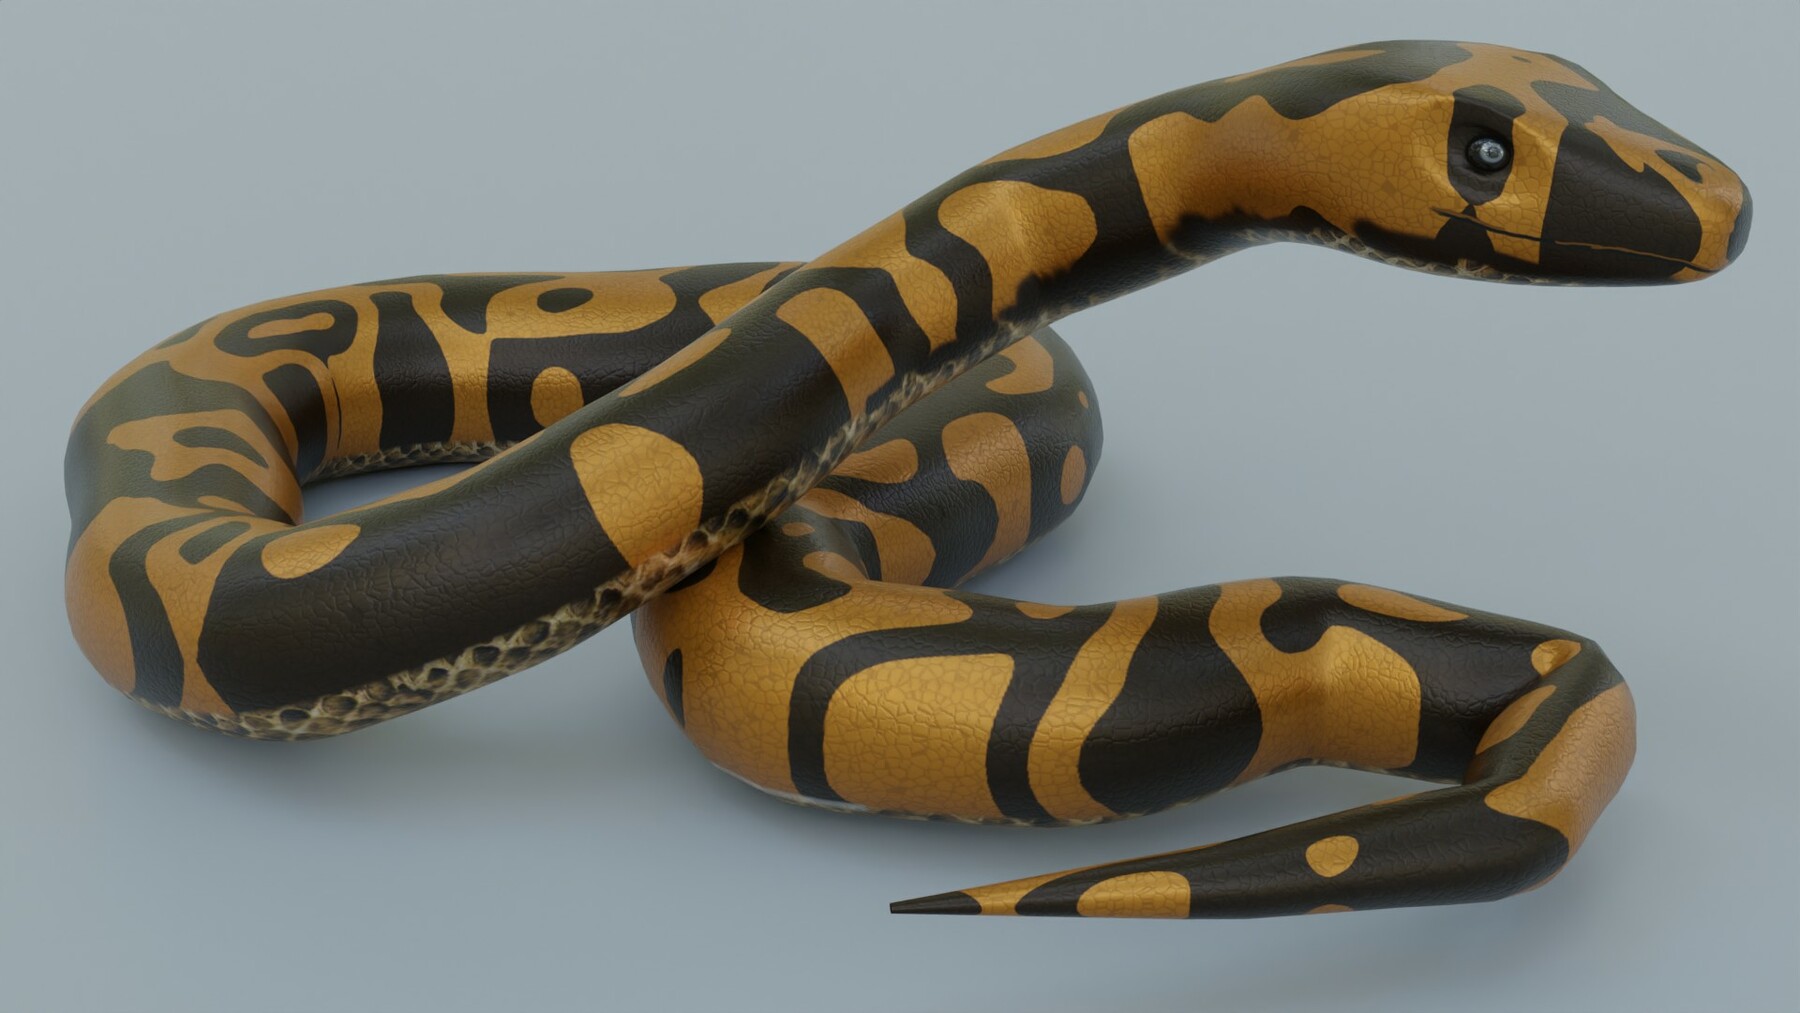 Snake Python 3d Model